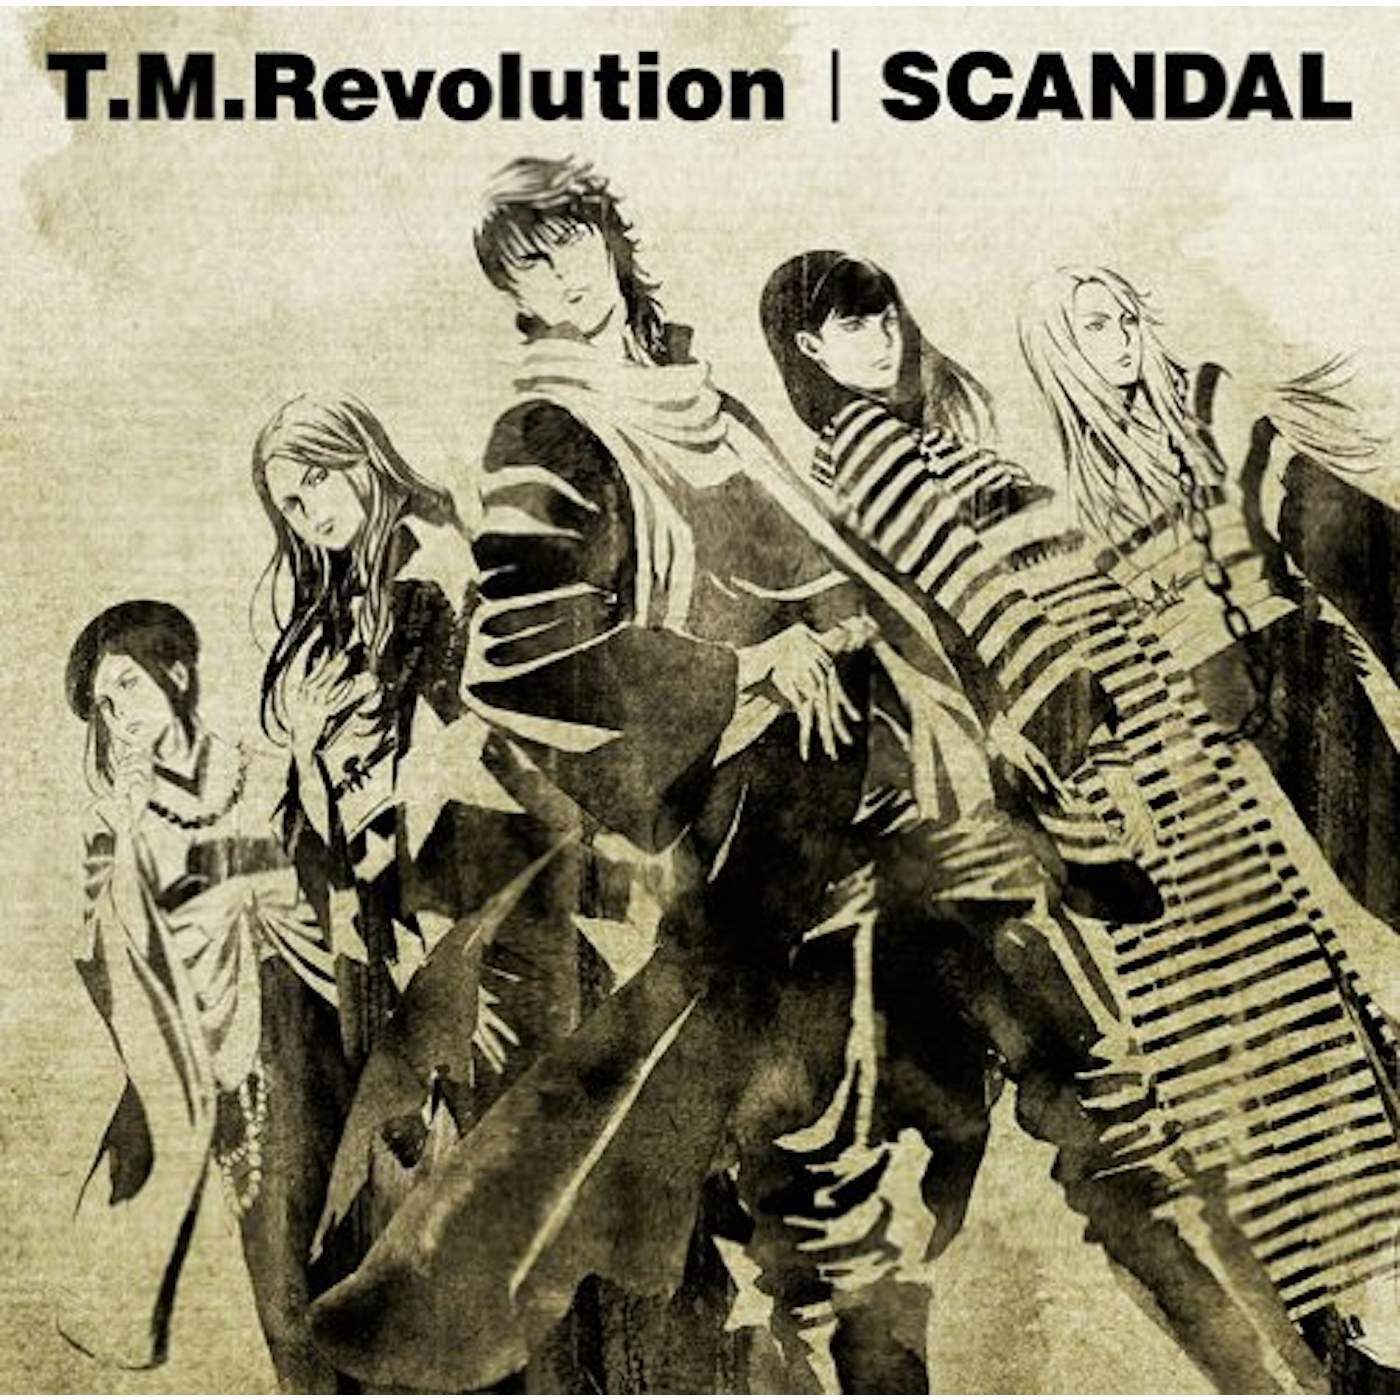 T.M.Revolution COUNT ZERO/RUNNERS HIGH CD